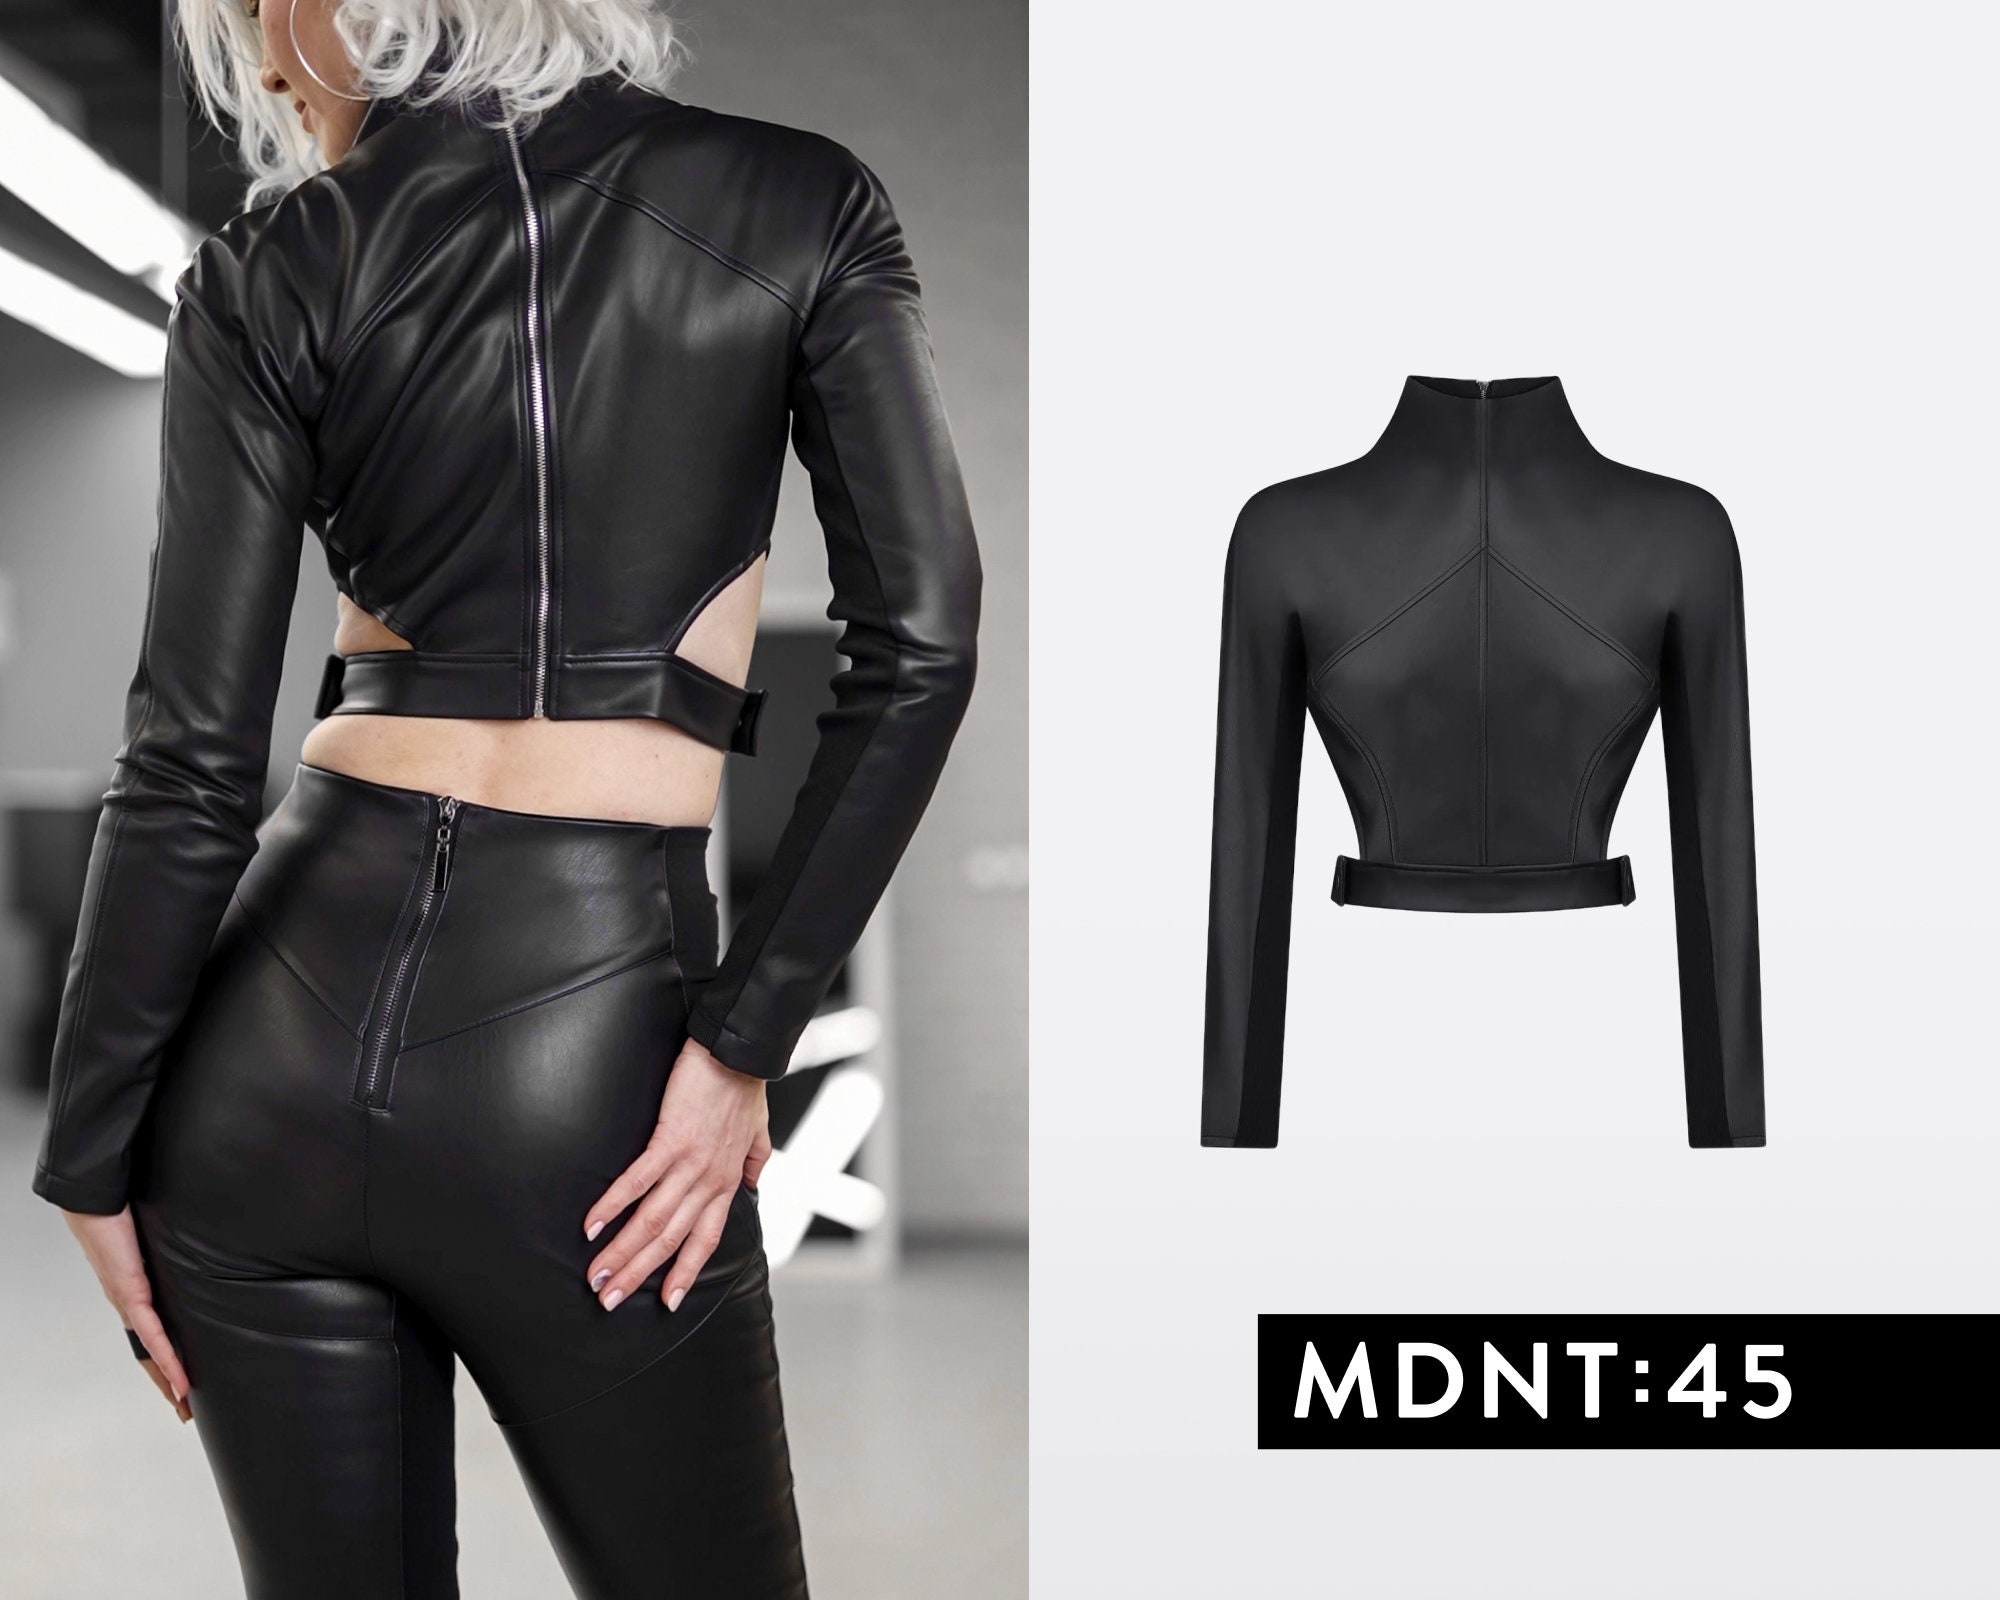 Black Leather Jacket Women, Sexy Long Sleeve Crop Top, Sci Fi Biker Jacket,  Zipper Cyberpunk Jacket, Futuristic Clothing Mdnt45, A0244 